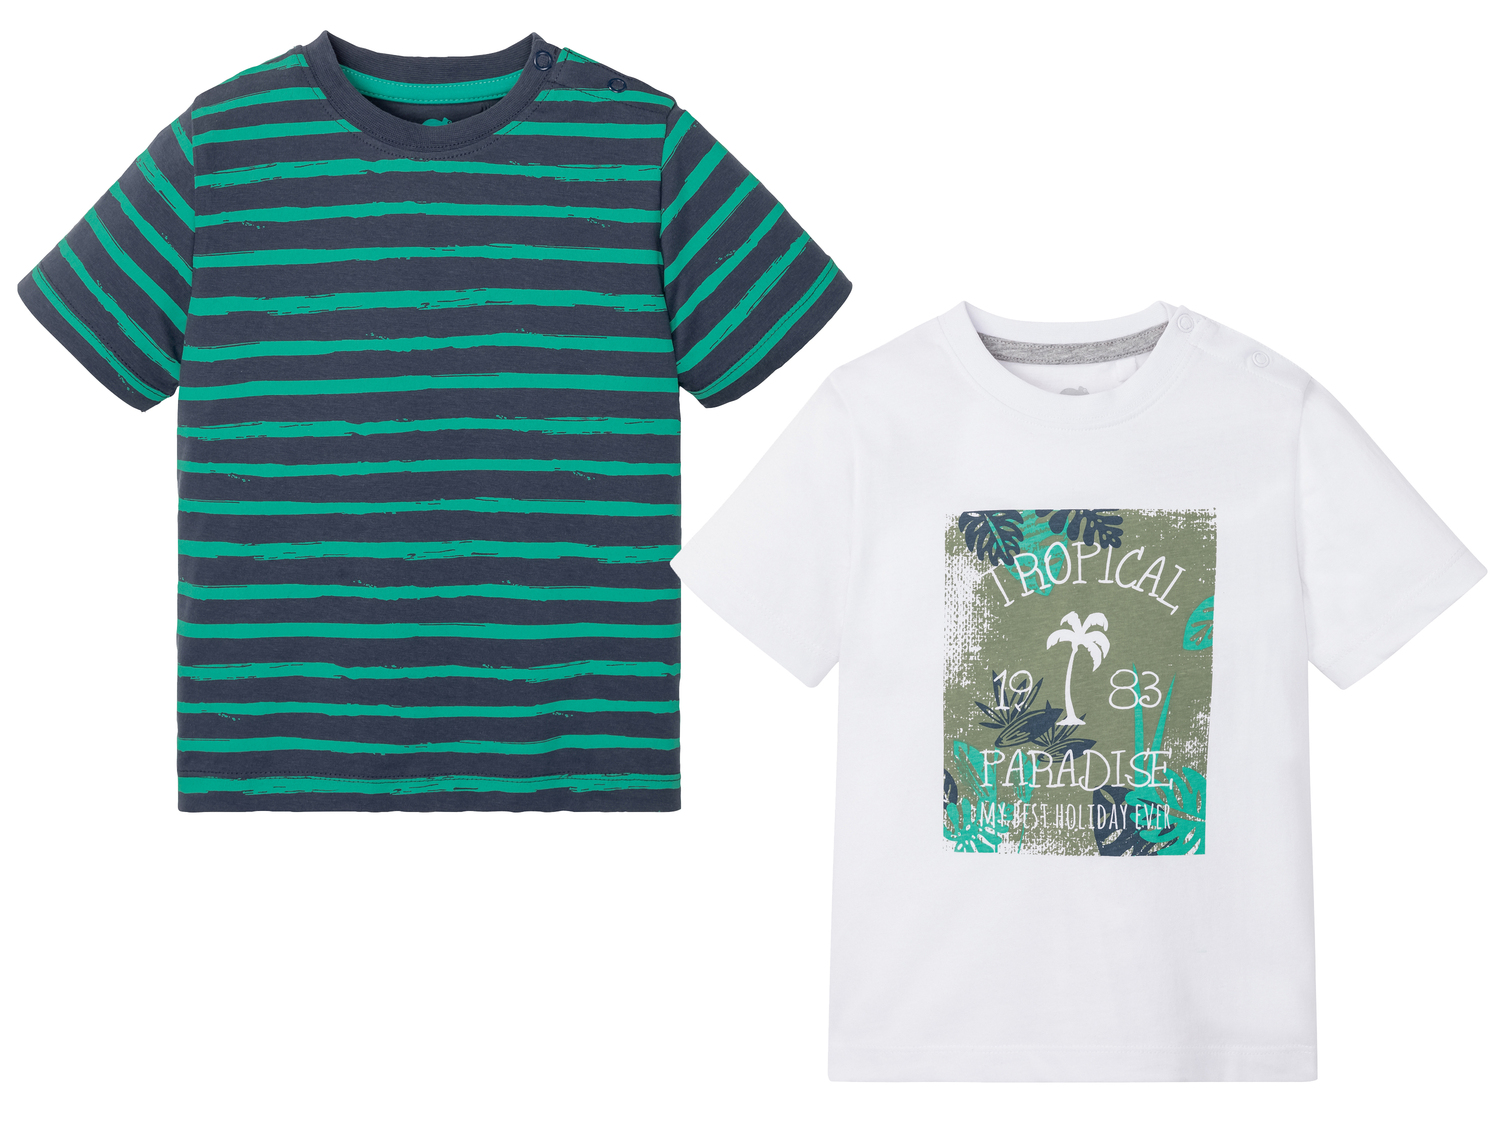 T-shirt da bambino Lupilu, prezzo 4.99 &#8364; 
2 pezzi - Misure: 1-6 anni
Taglie ...